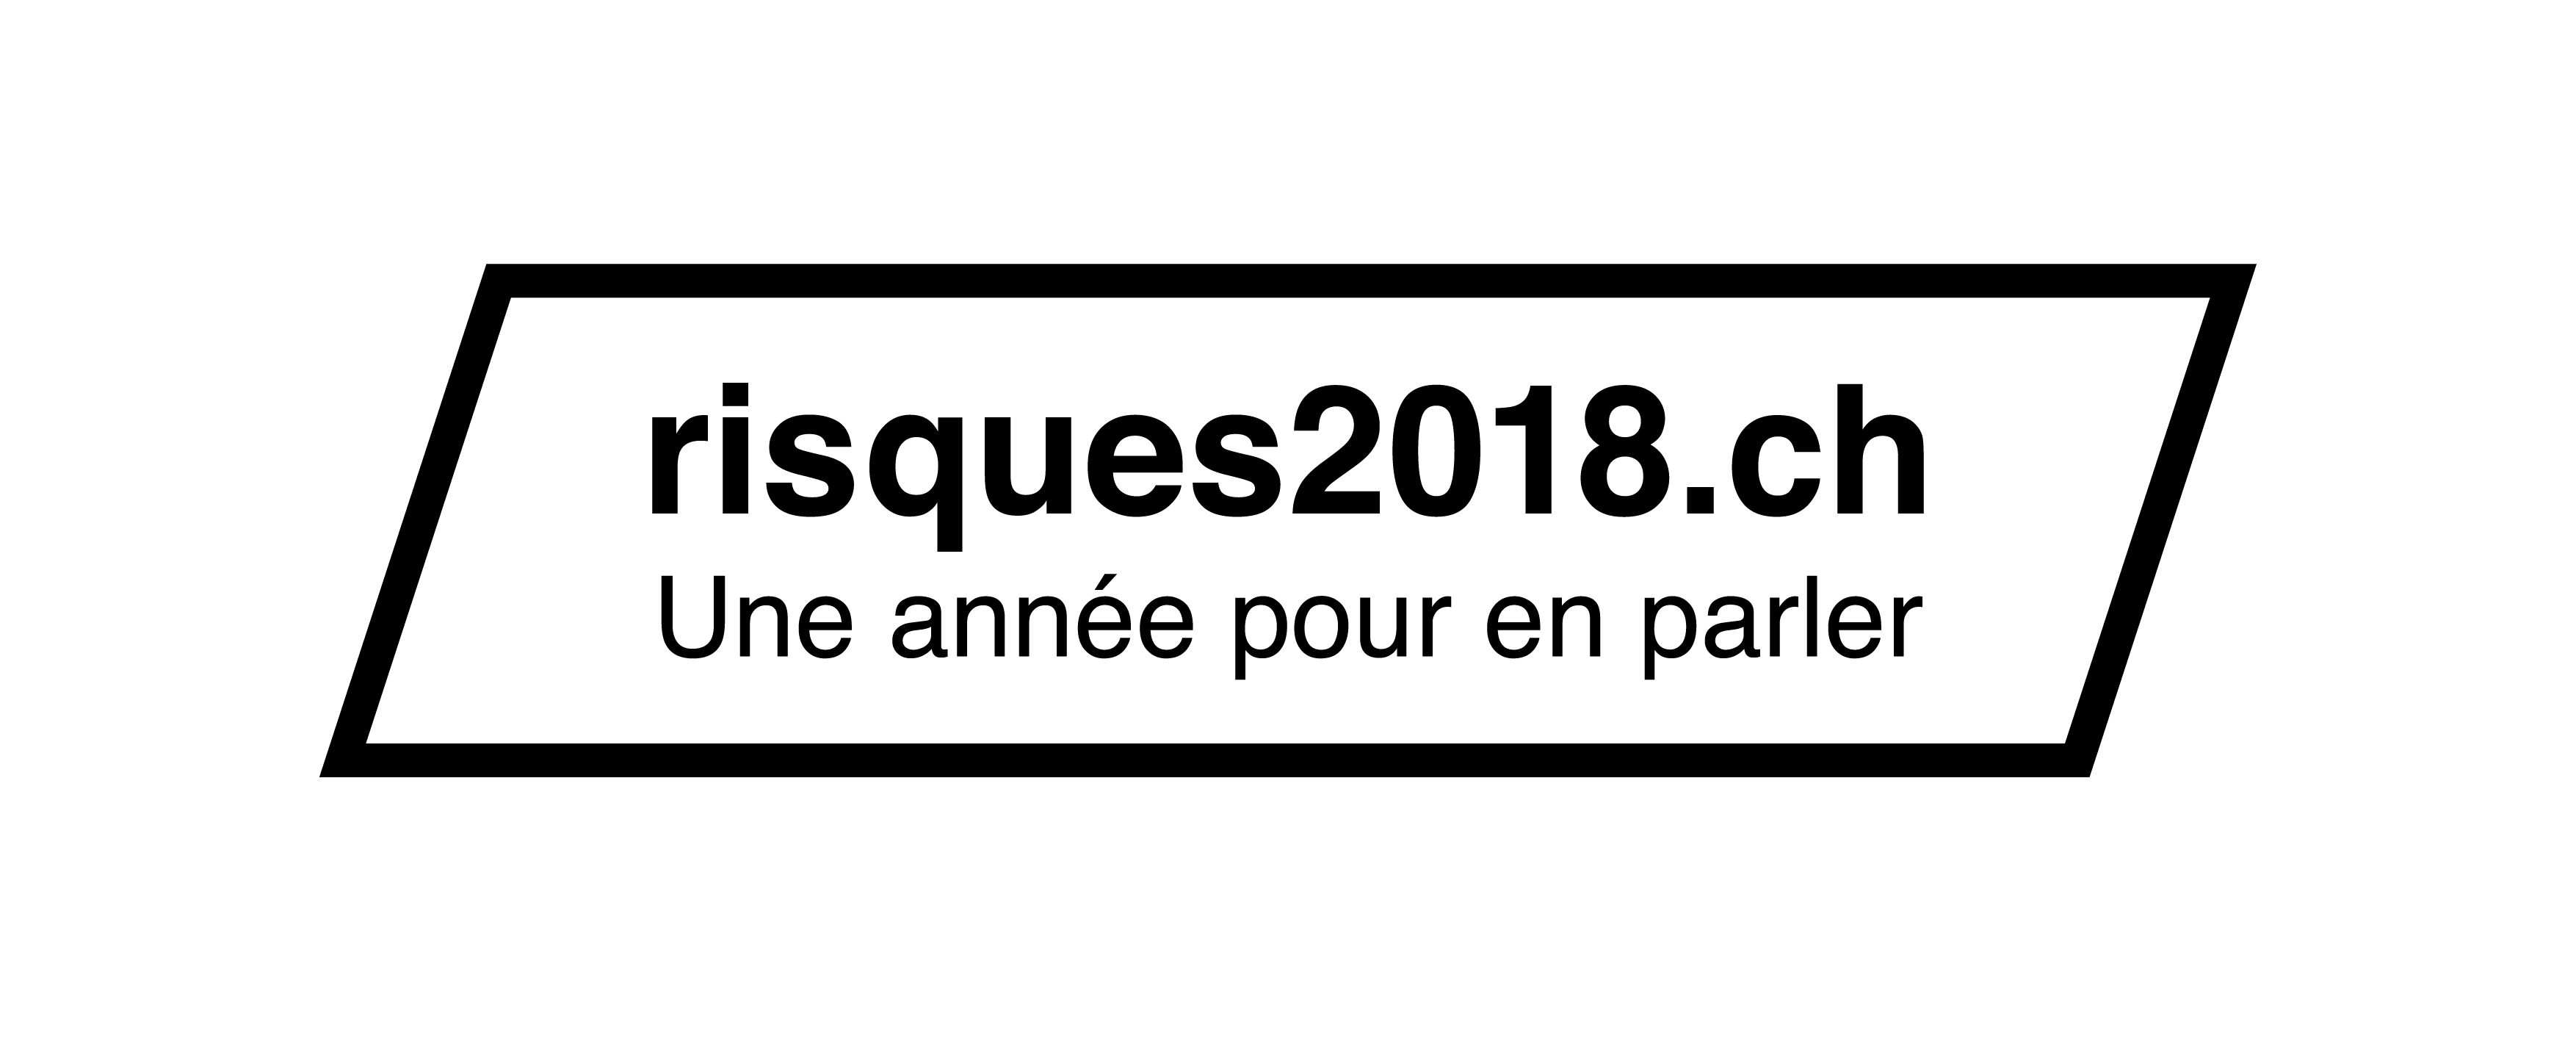 Risques2018 logo fr sansfond noir